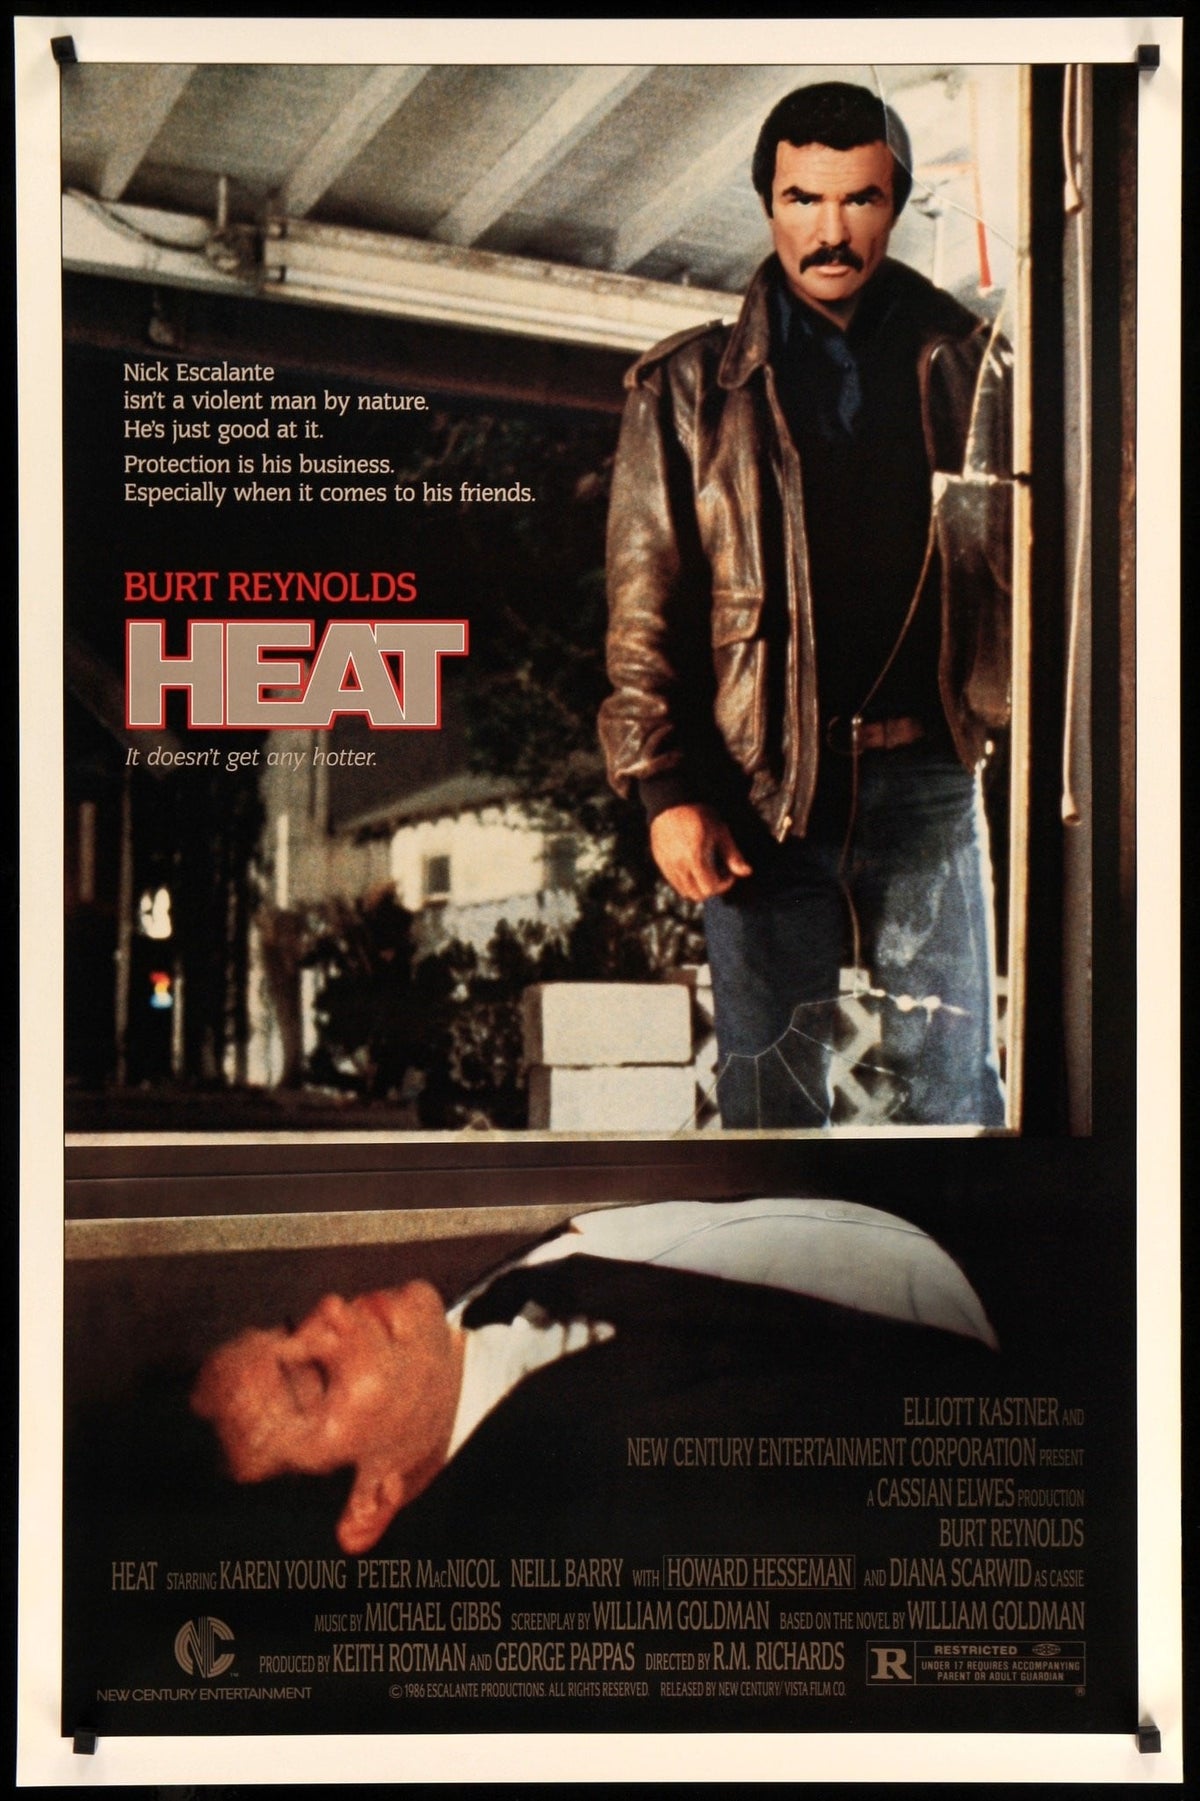 Heat (1986) original movie poster for sale at Original Film Art